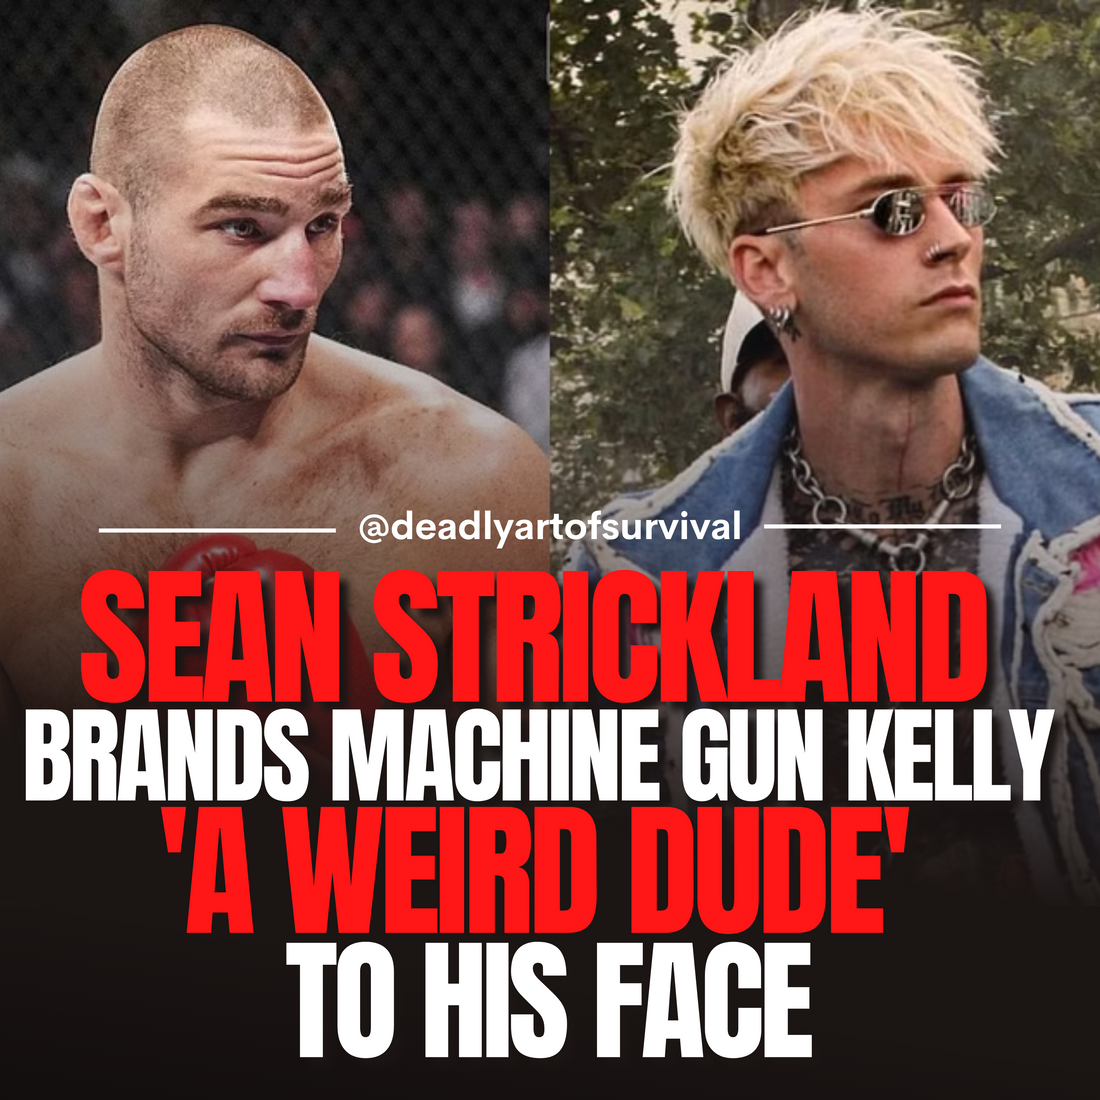 Sean-Strickland-Confronts-Machine-Gun-Kelly-Brands-Him-A-Weird-Dude-Face-to-Face deadlyartofsurvival.com